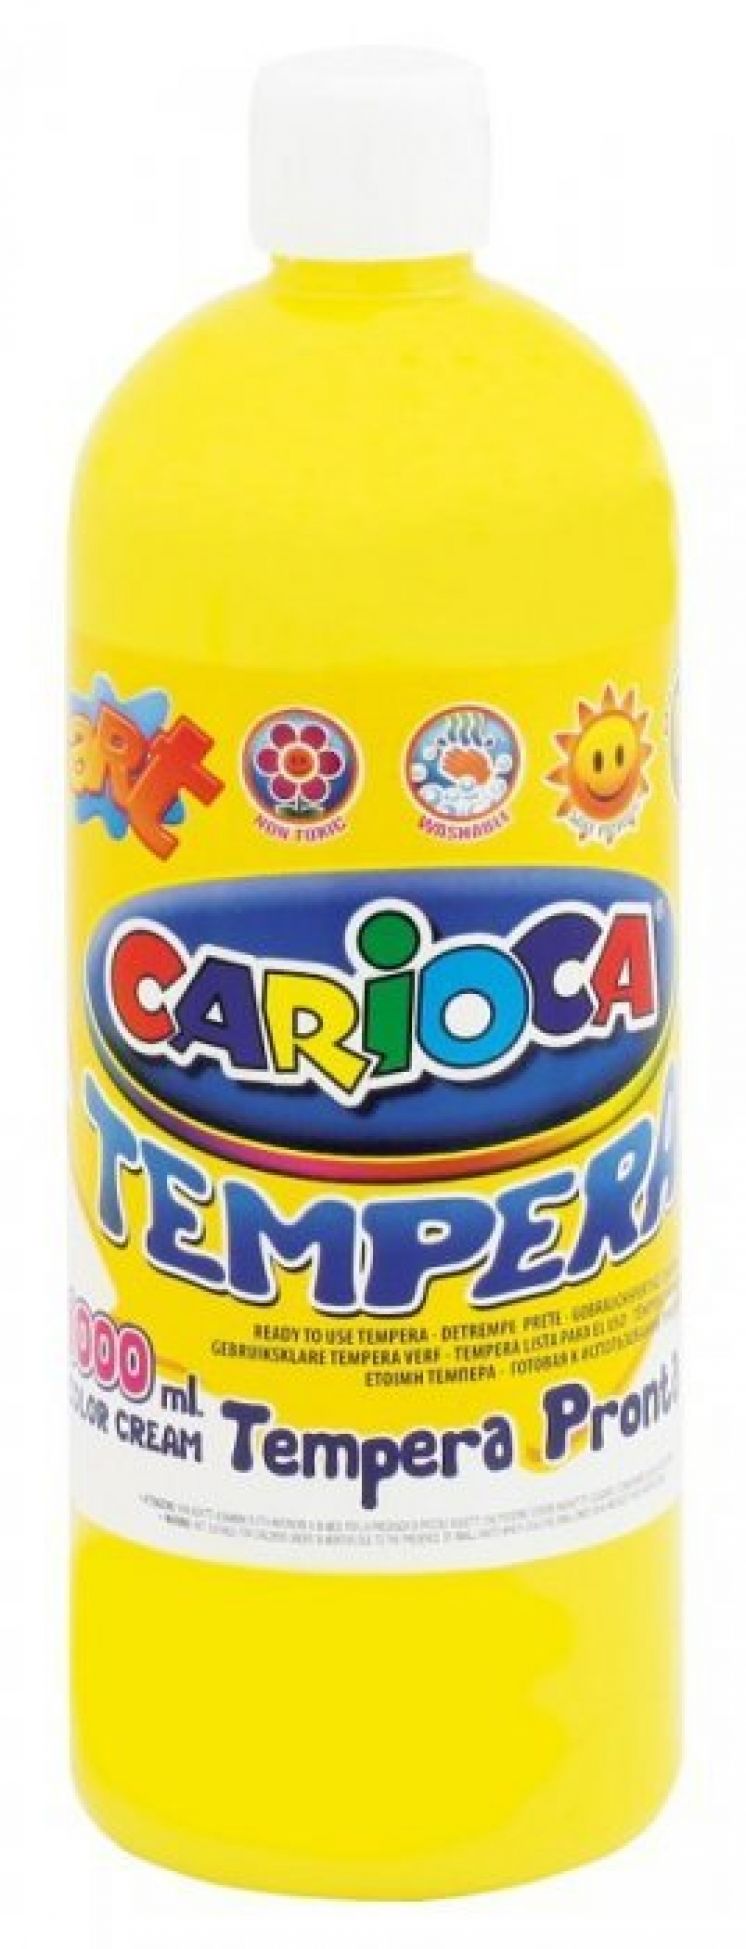 Farba Carioca tempera 1000 ml żółta cytrynowa (ko03/02)